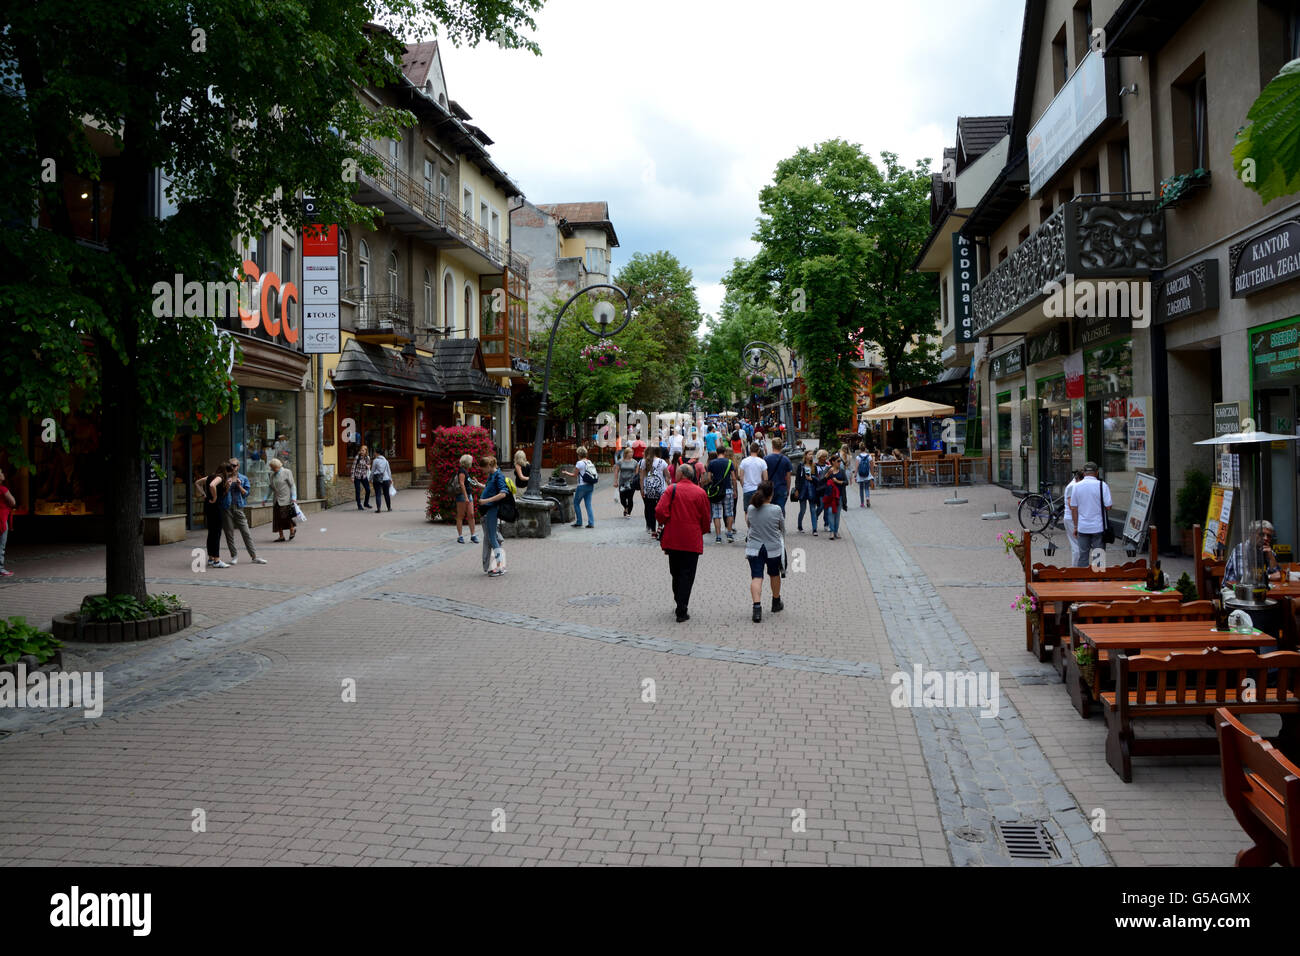 Zakopane, Poland - June 15, 2016: Krupowki street in Zakopane in Poland. Unidentified people visible. Stock Photo